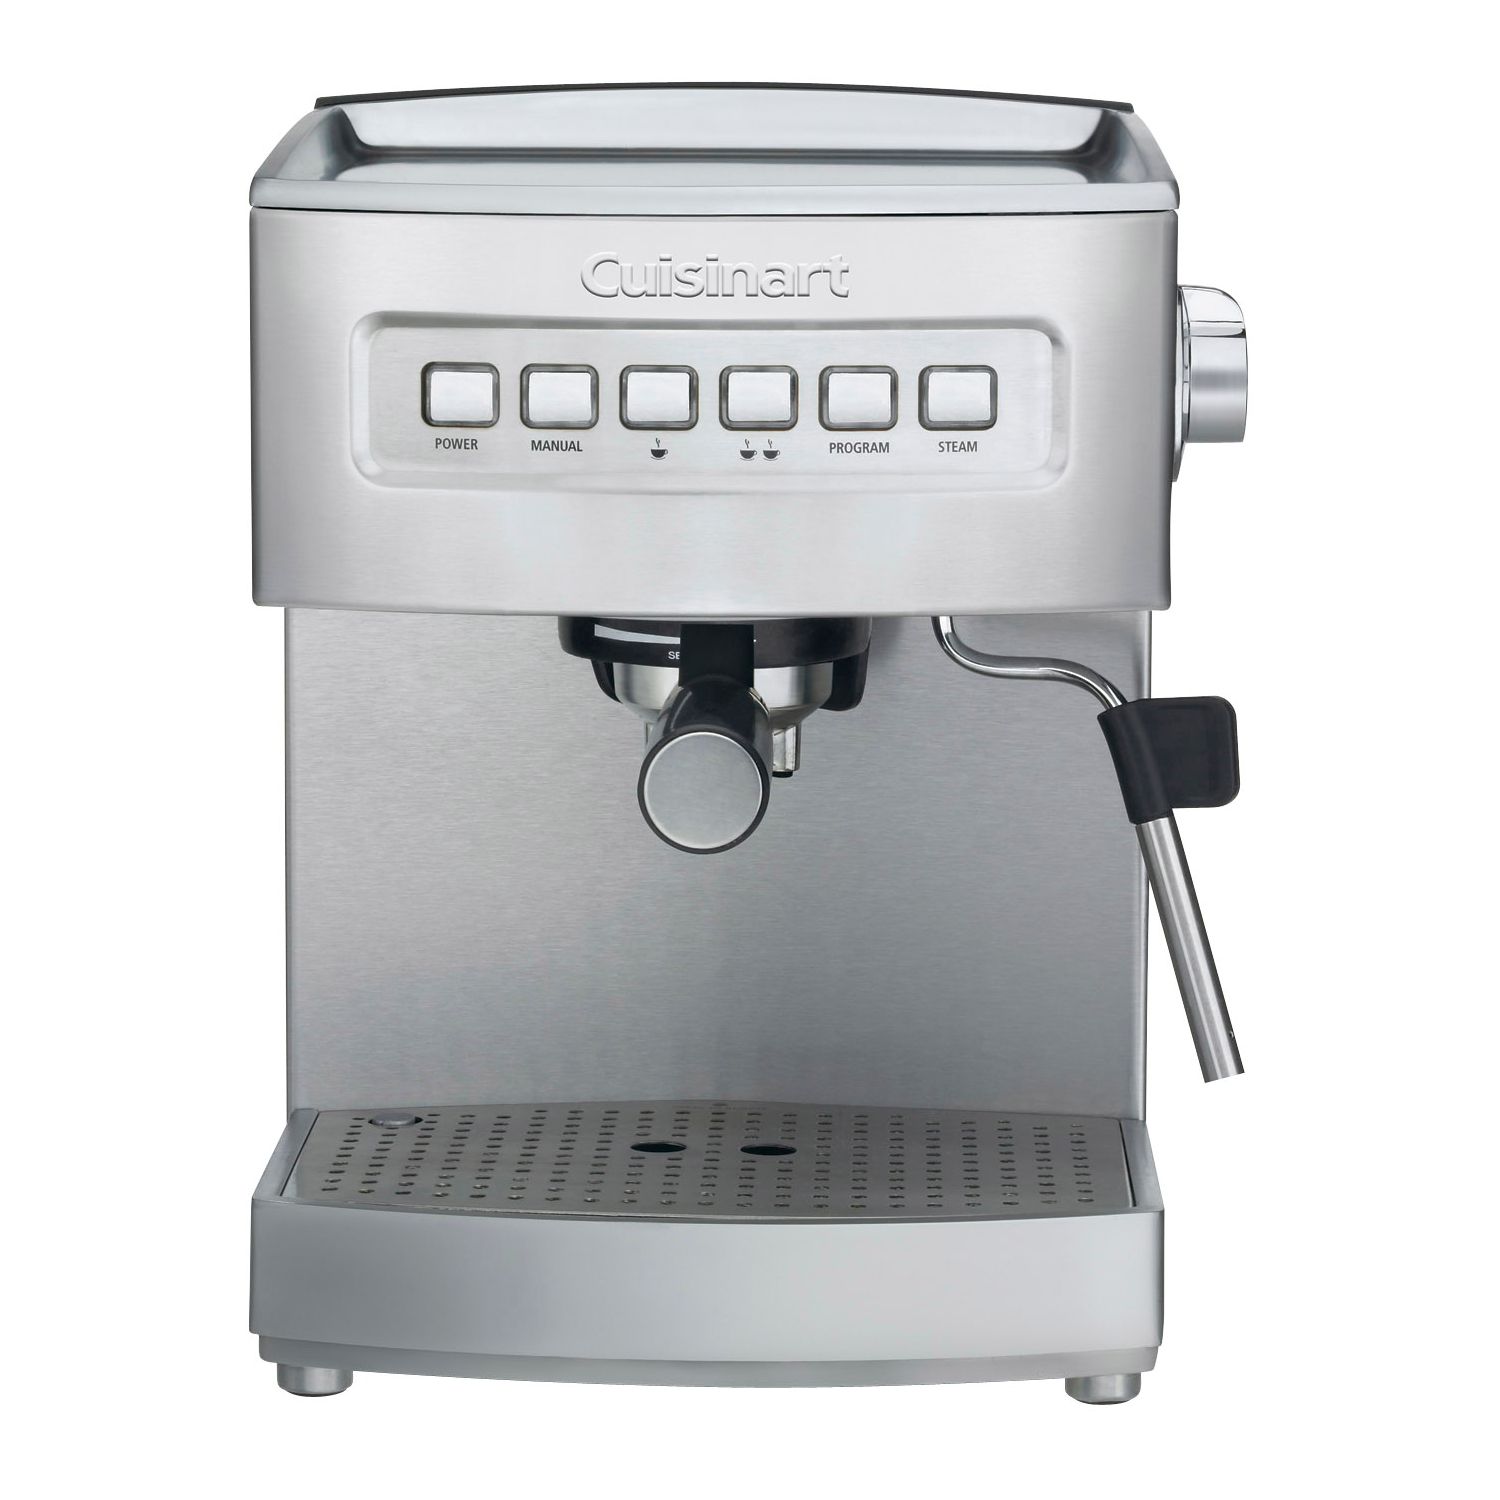 Zulay Magia Ampro Automatic Espresso Machine - Refurbished